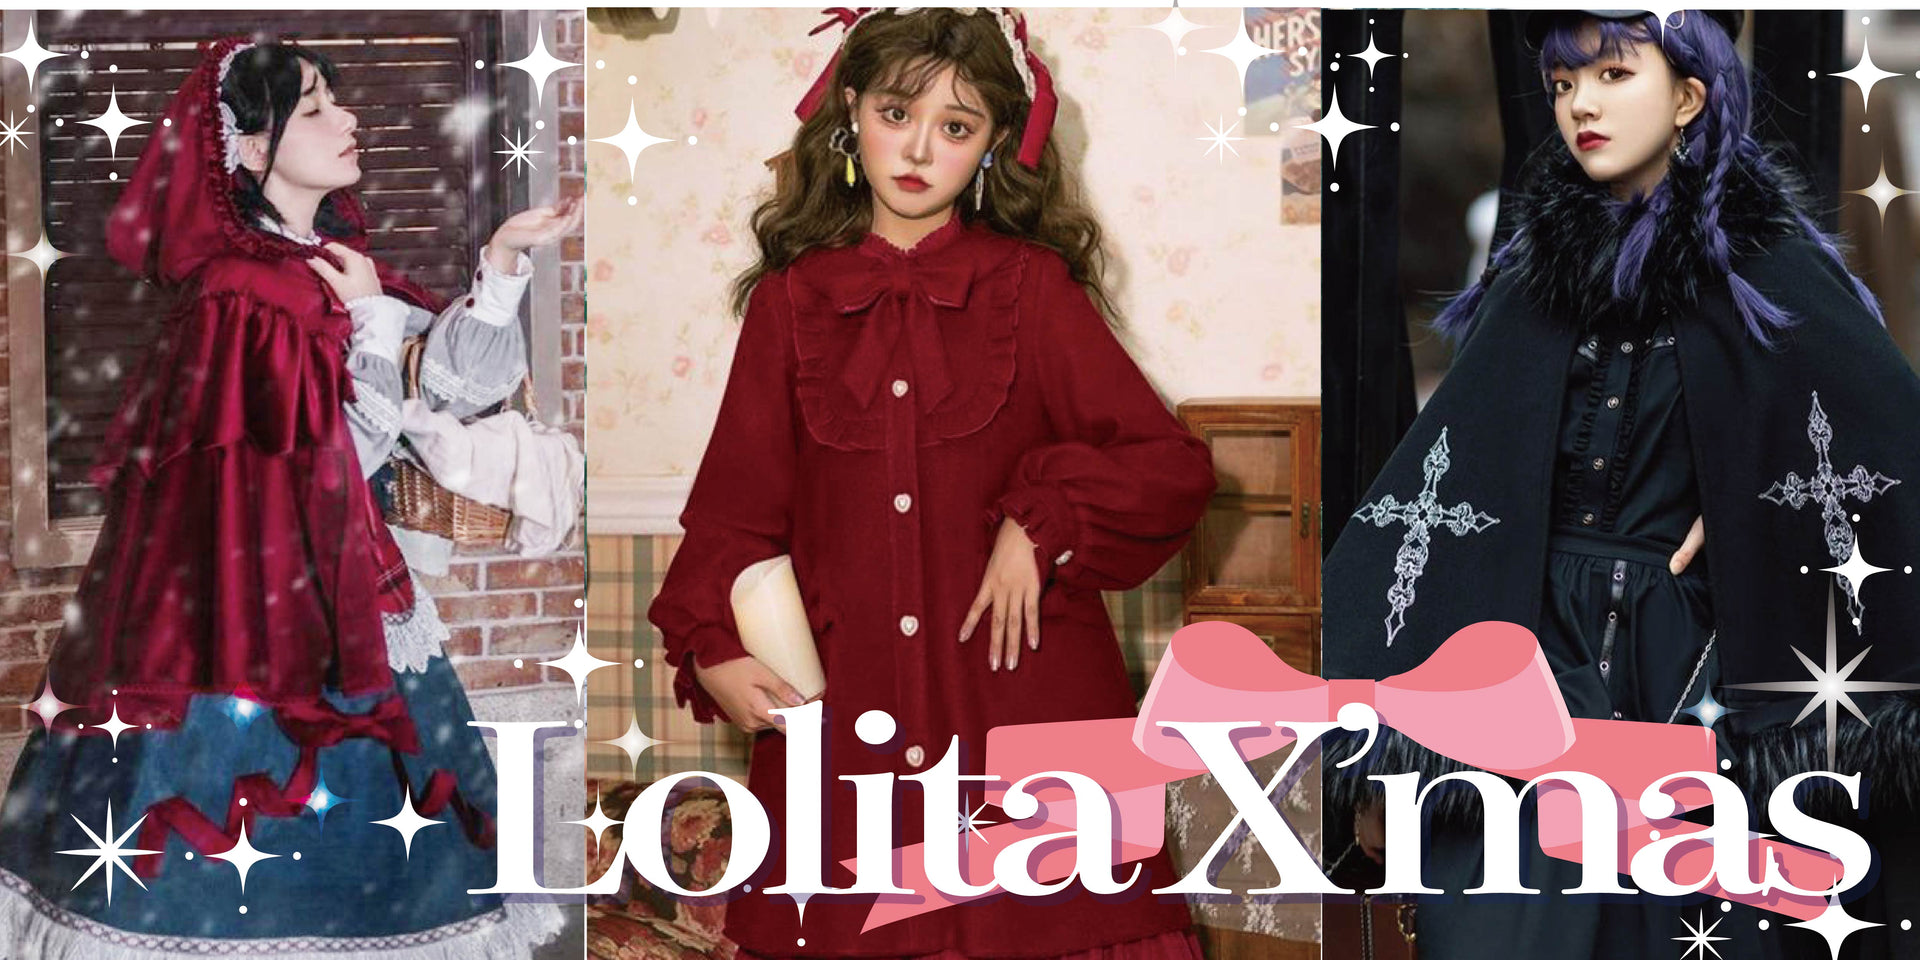 Girls' Dress New Korean Cute Exotic Lolita Princess Skirt